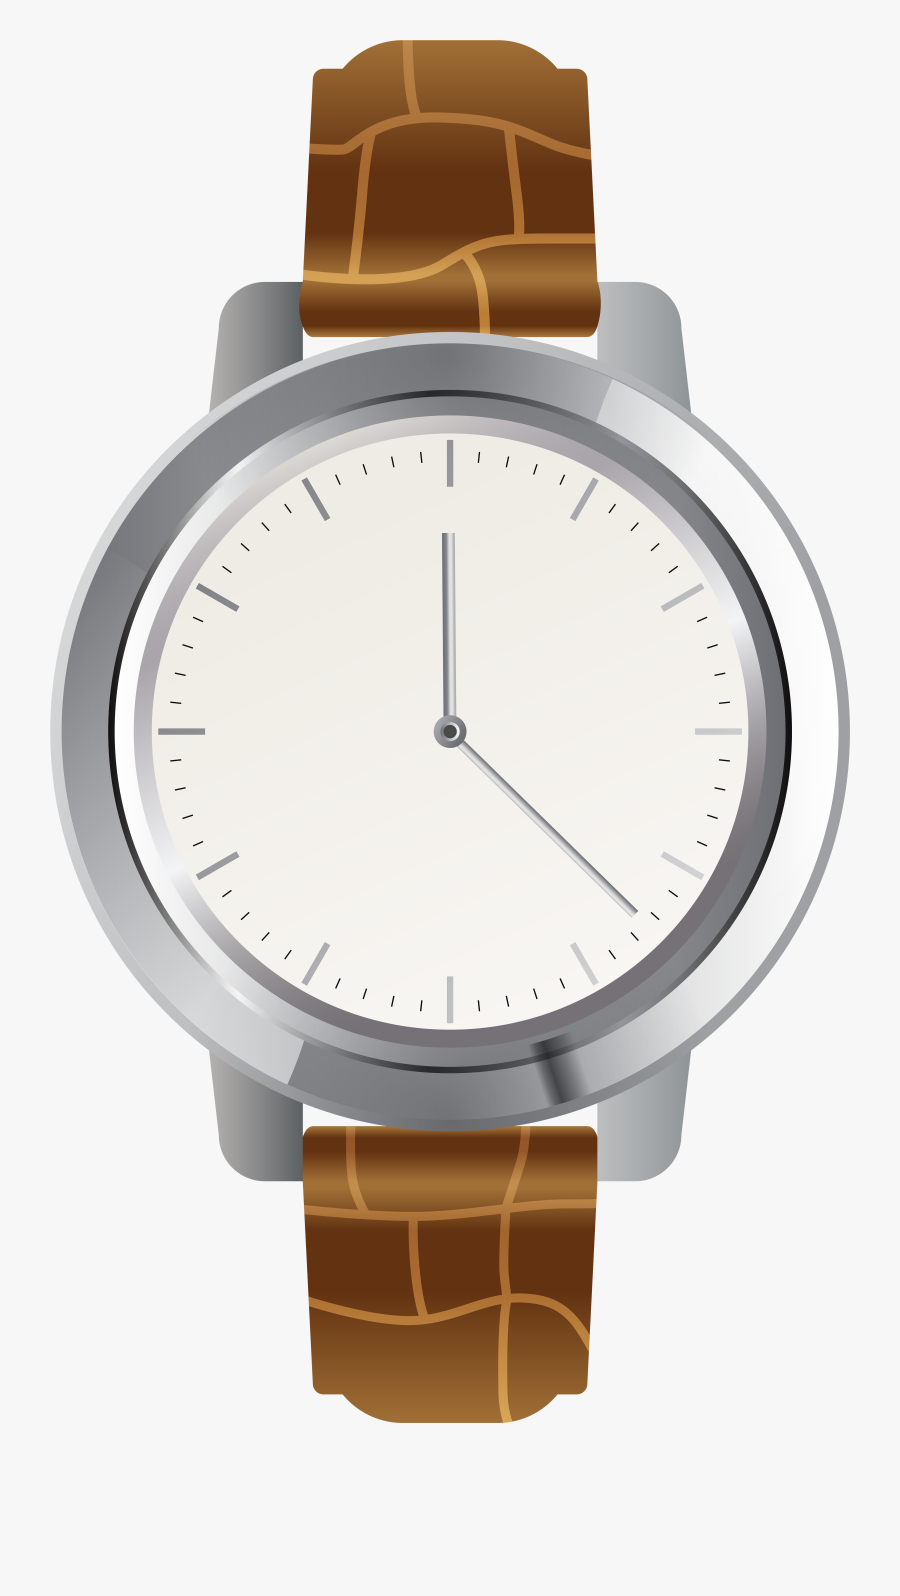 Brown Wrist Watch Png Clip Art - Wrist Watch Clipart No Background, Transparent Clipart